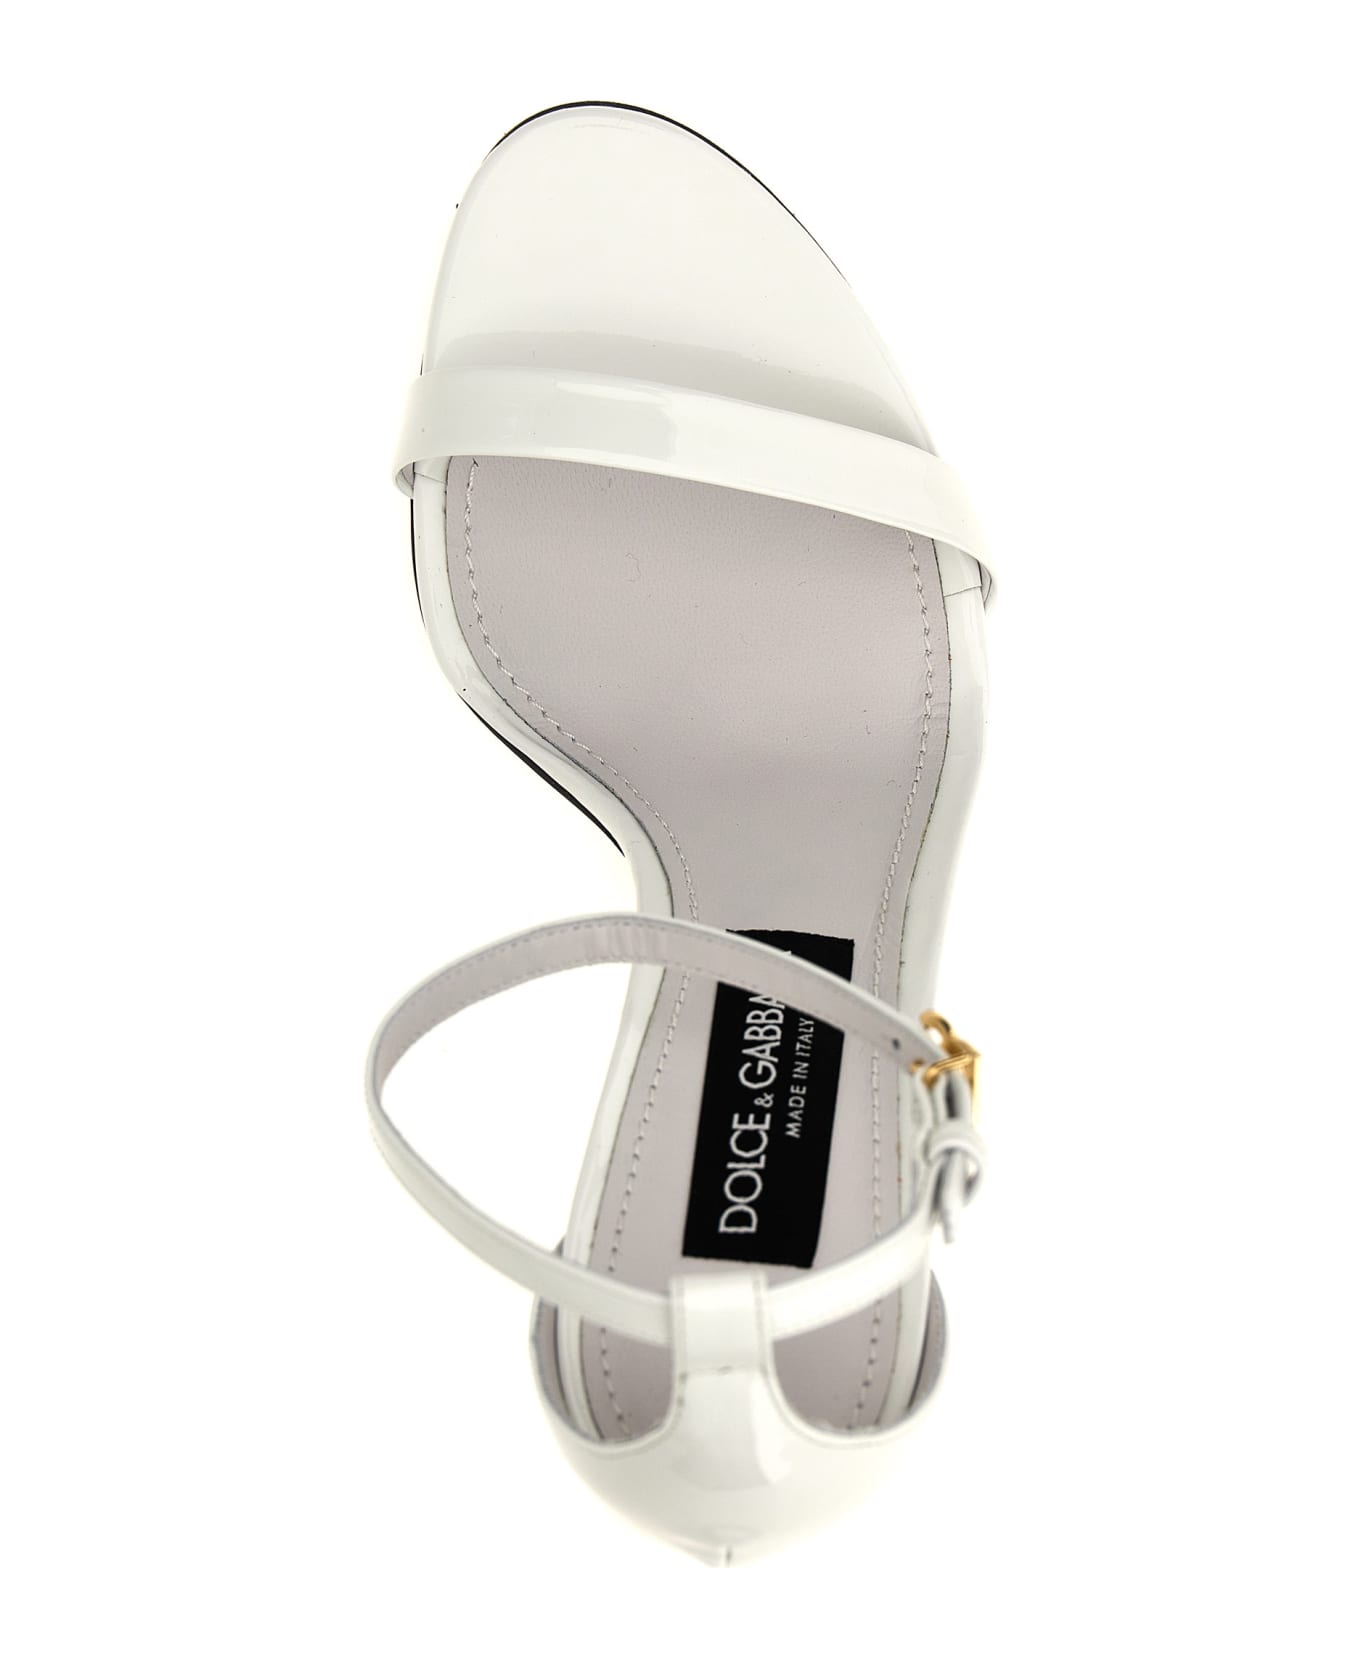 Dolce & Gabbana Patent Sandals - White サンダル